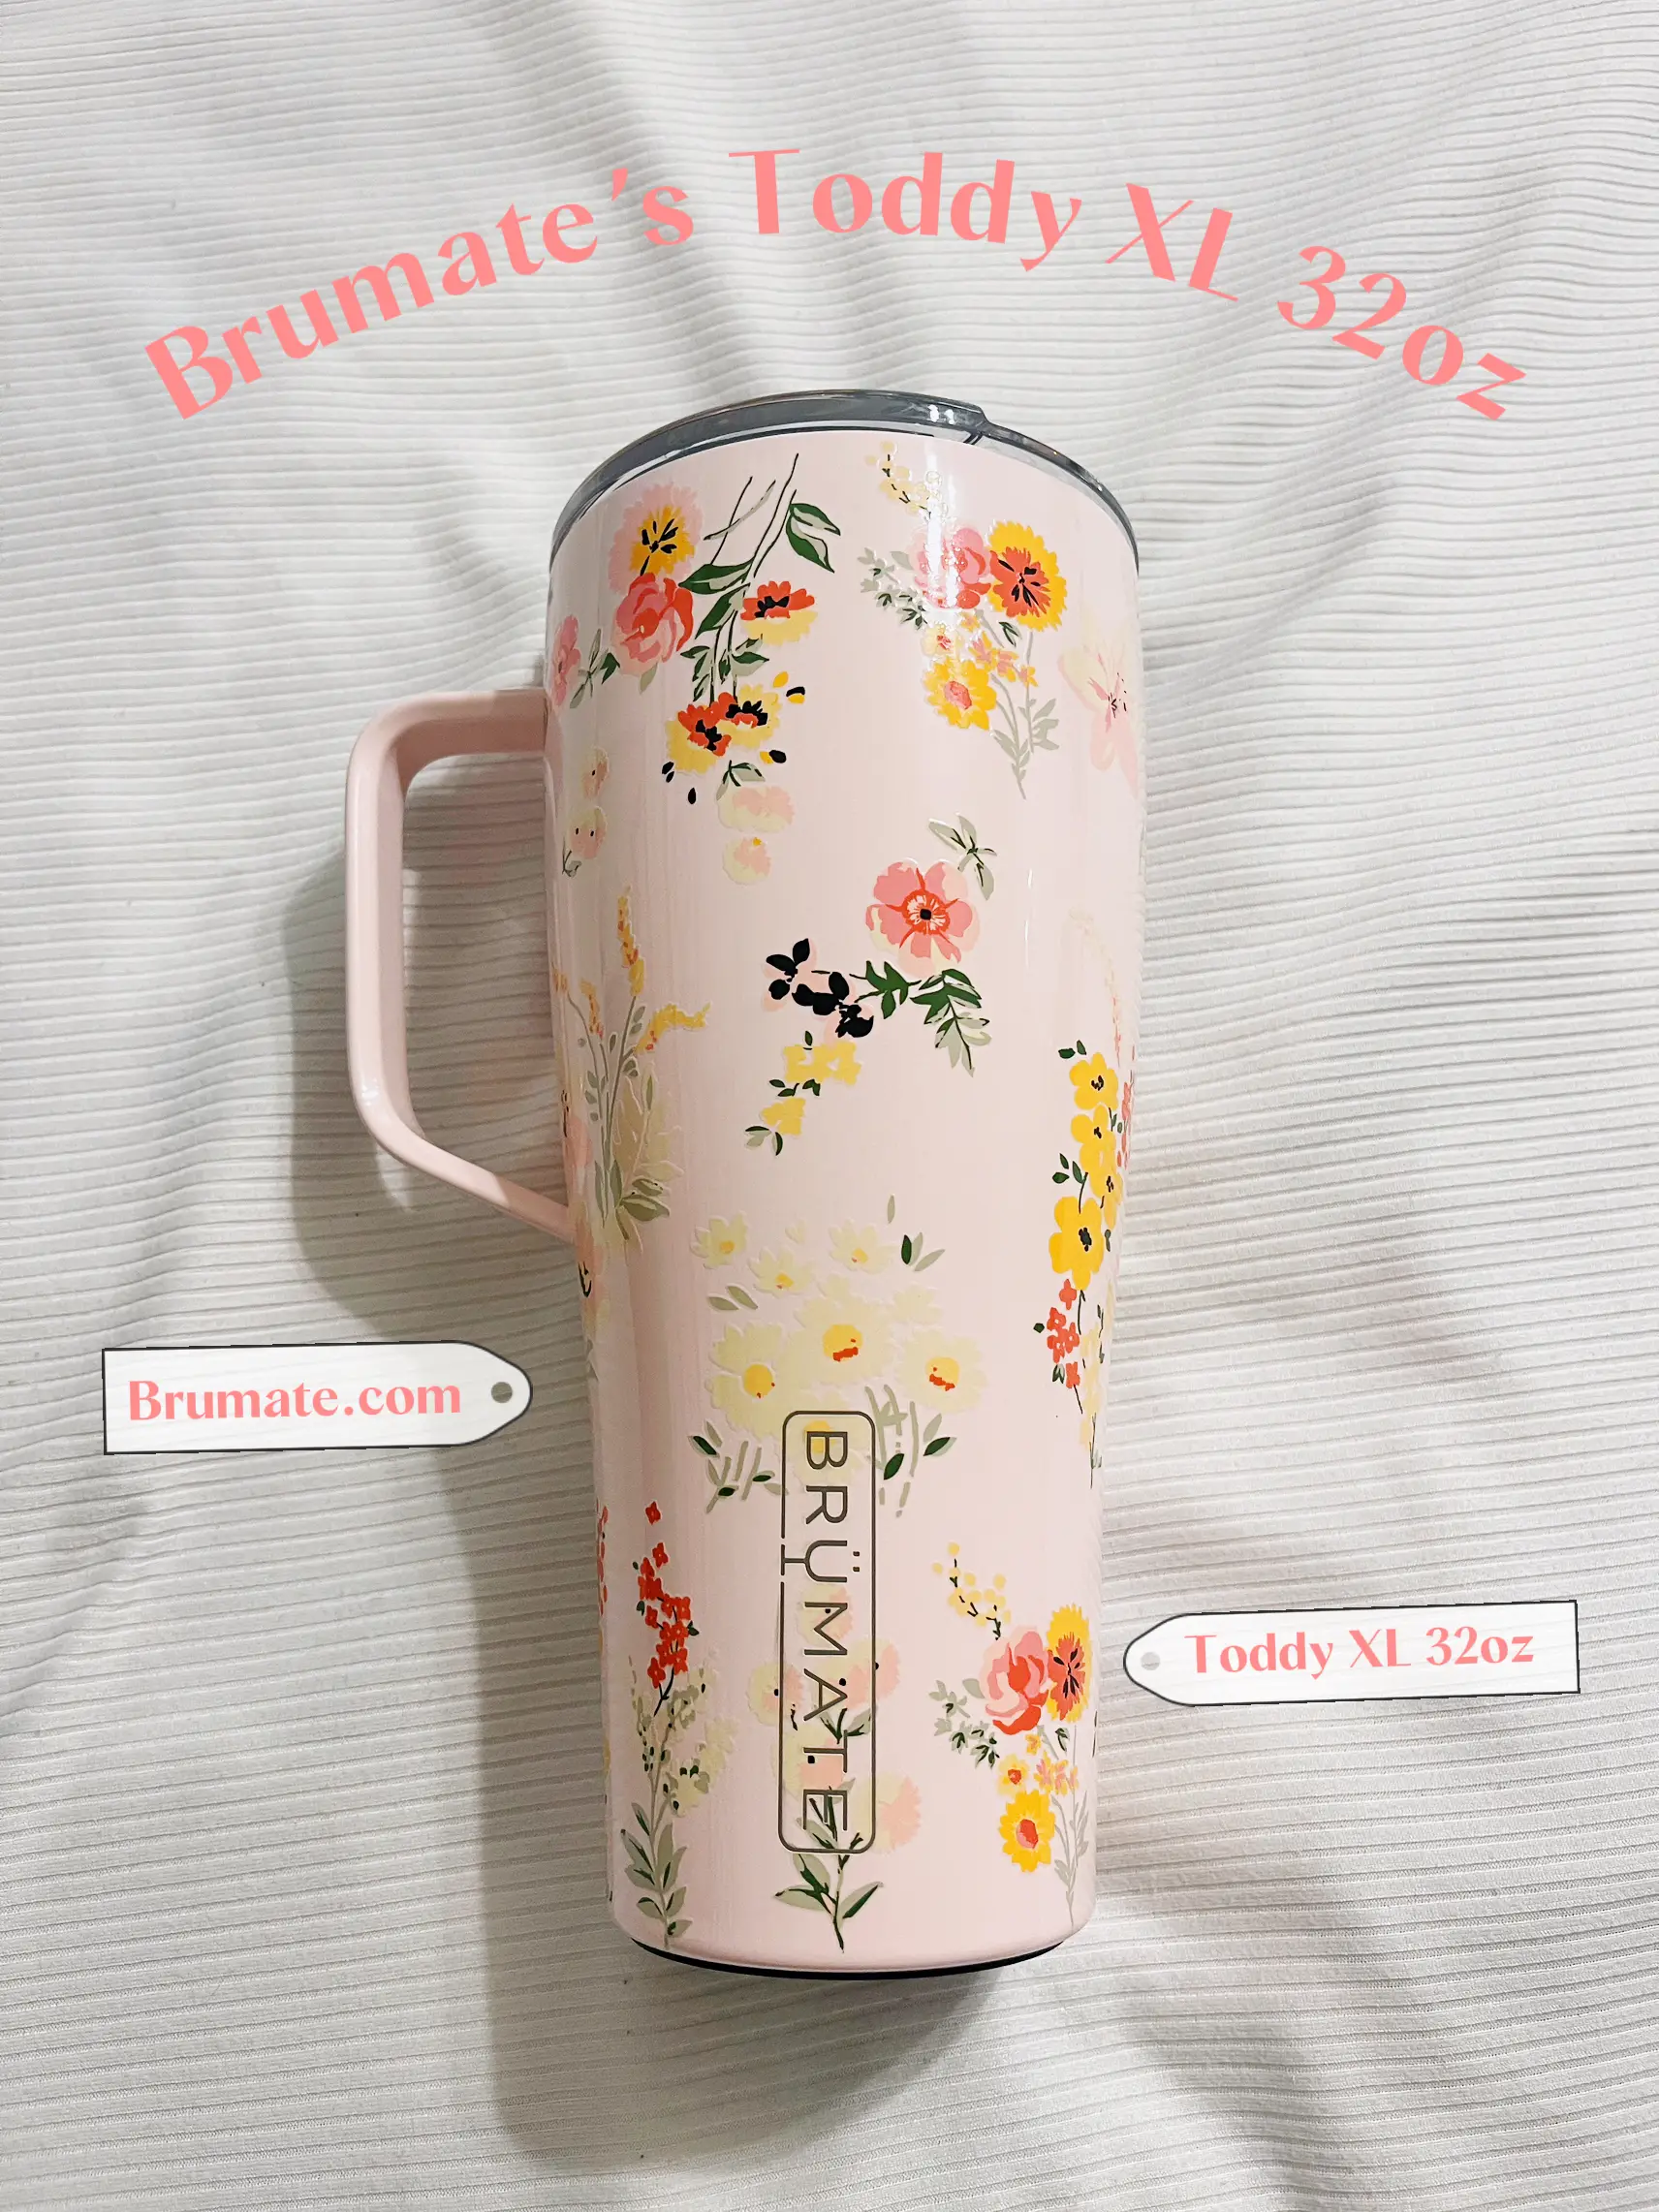 Personalized BruMate Toddy XL 32 oz Mug